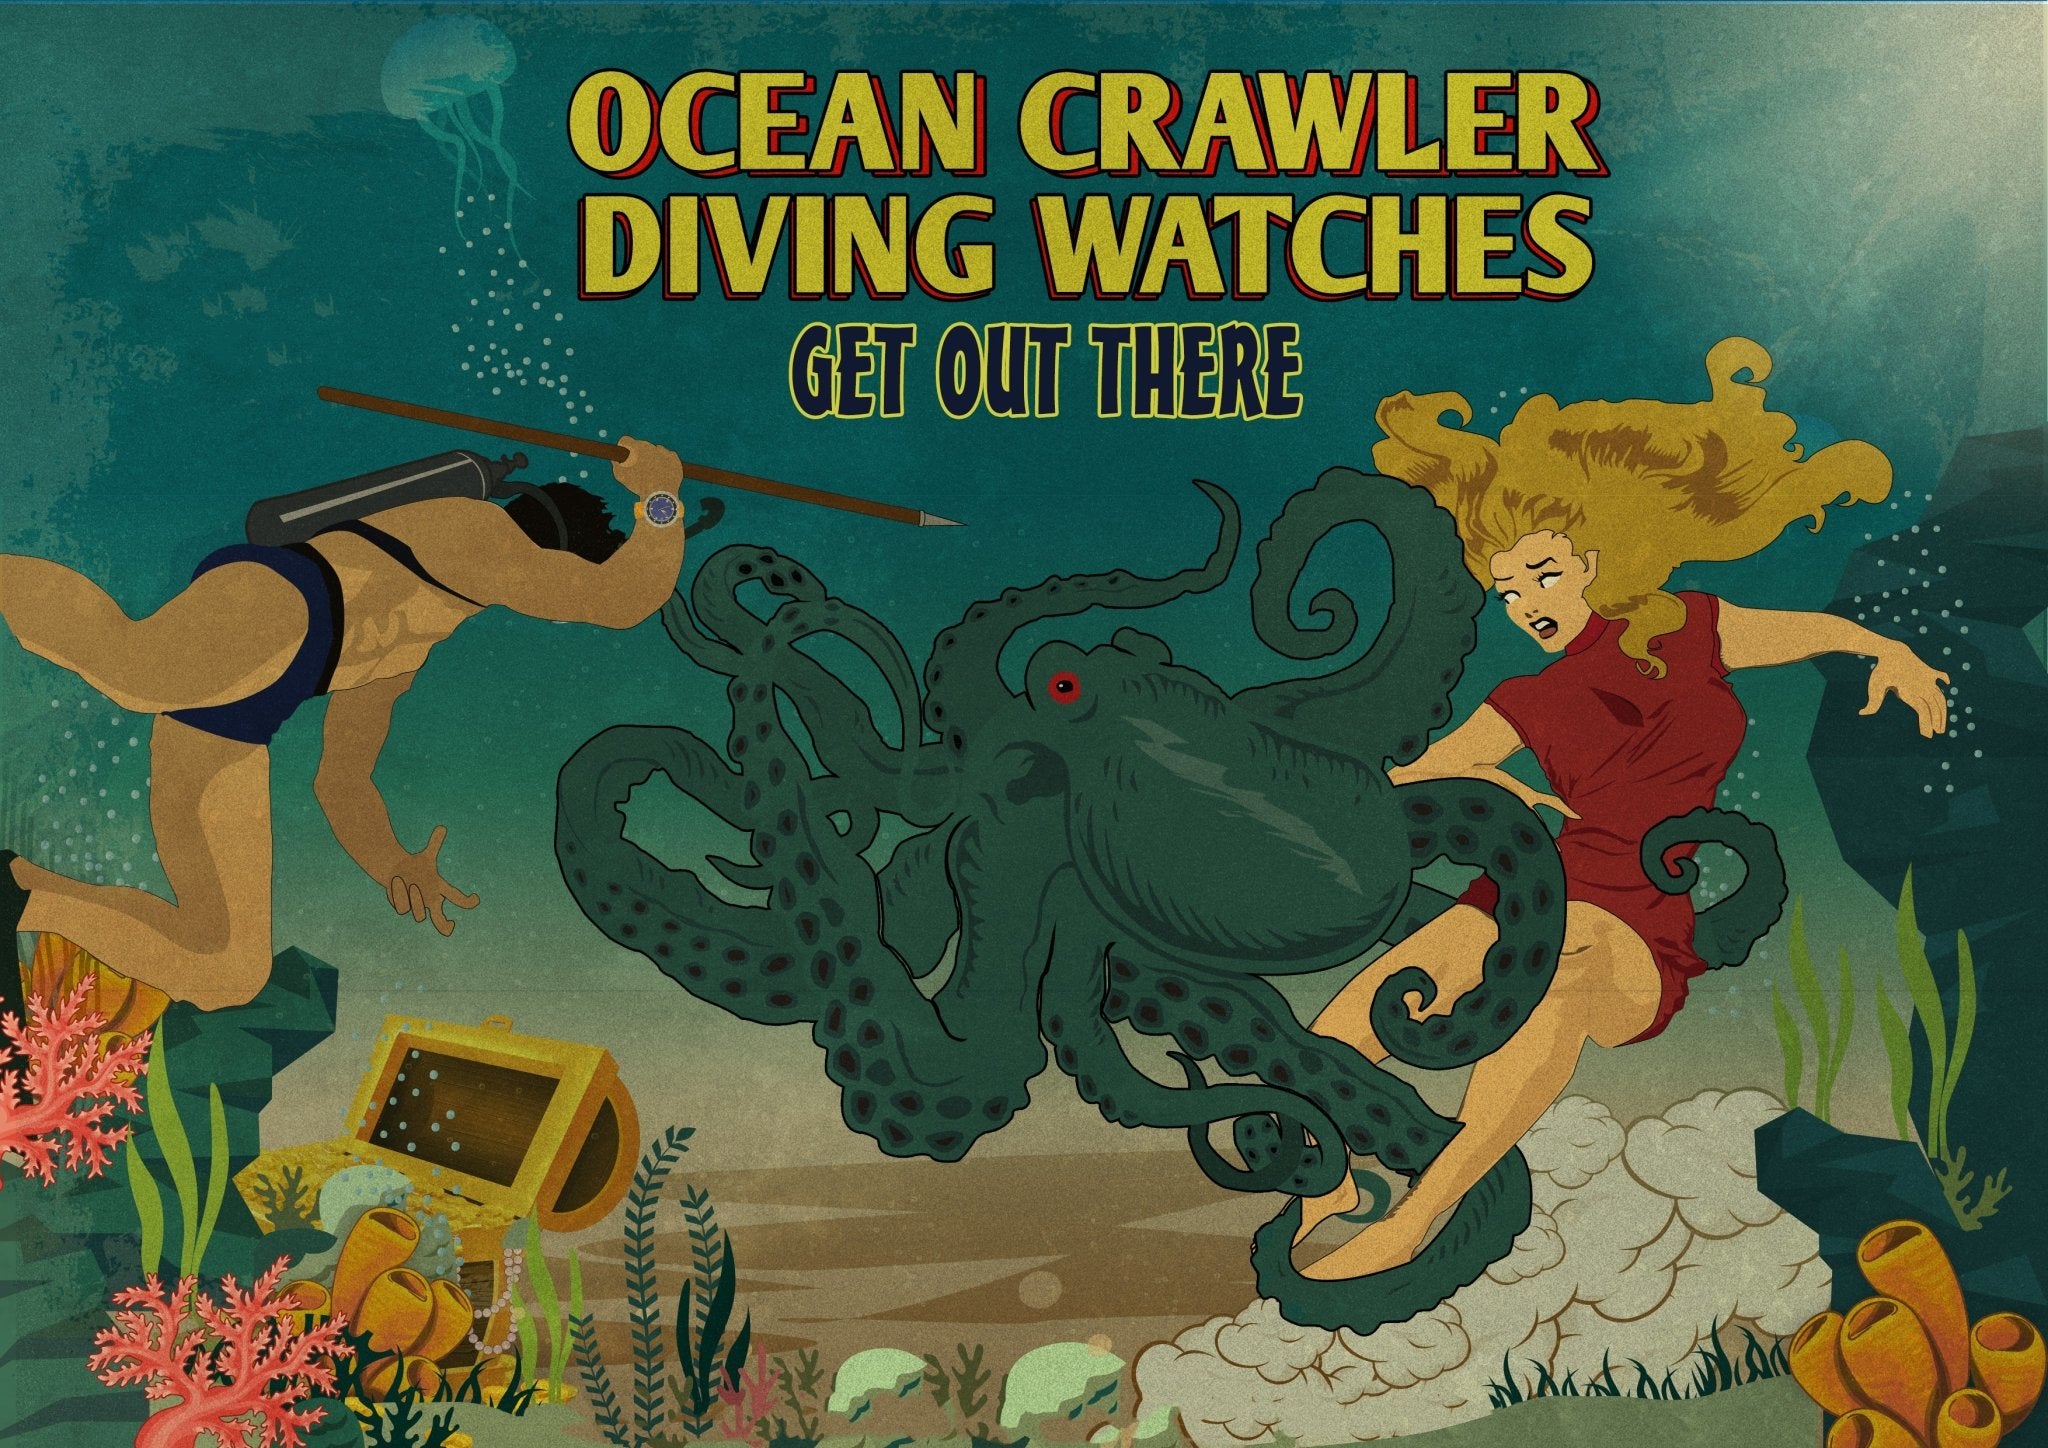 Ocean Crawler Diving Watches Poster - 18 X 24 Inches. - Ocean Crawler Watch Co.